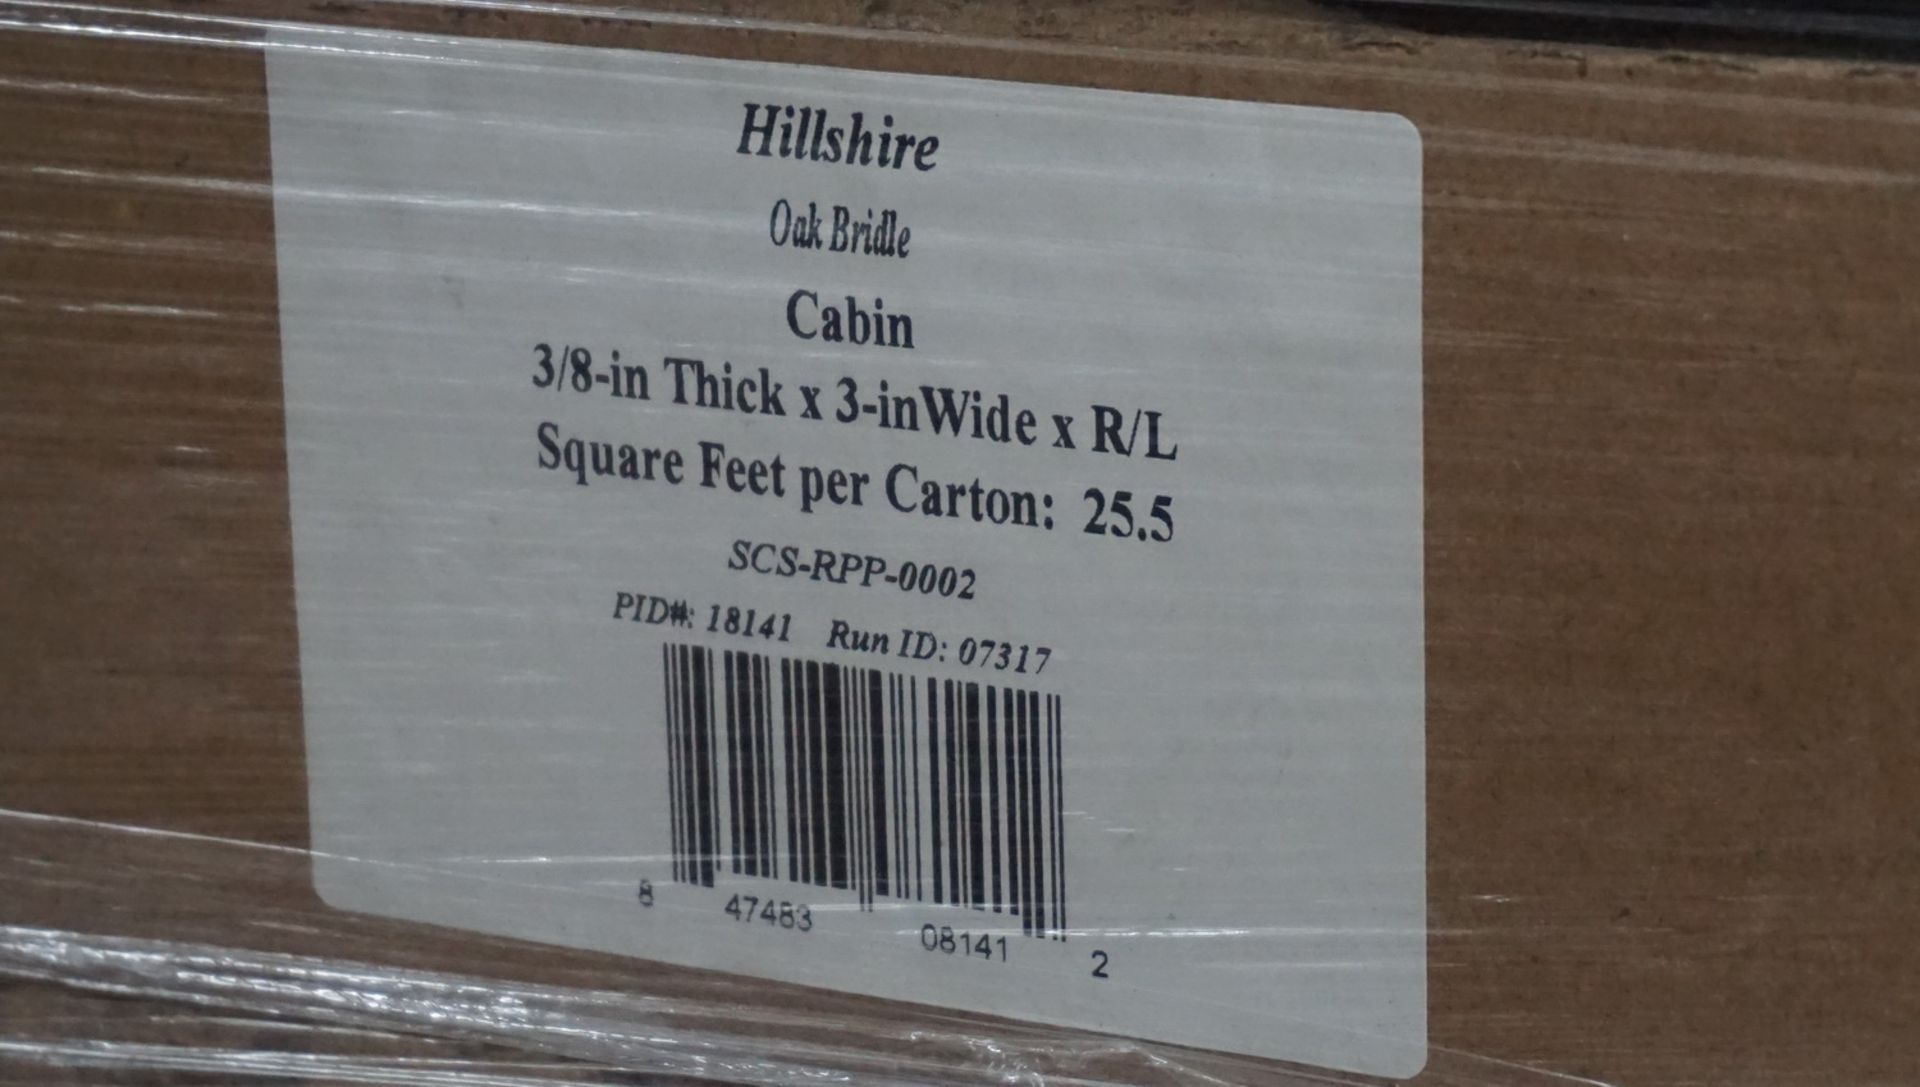 BOXES - HILLSHIRE OAK BRIDLE CABIN 3/8" X 3" X R/L ENGINEERED HARDWOOD ( 24.5 SQFT / BOX) - Image 2 of 5